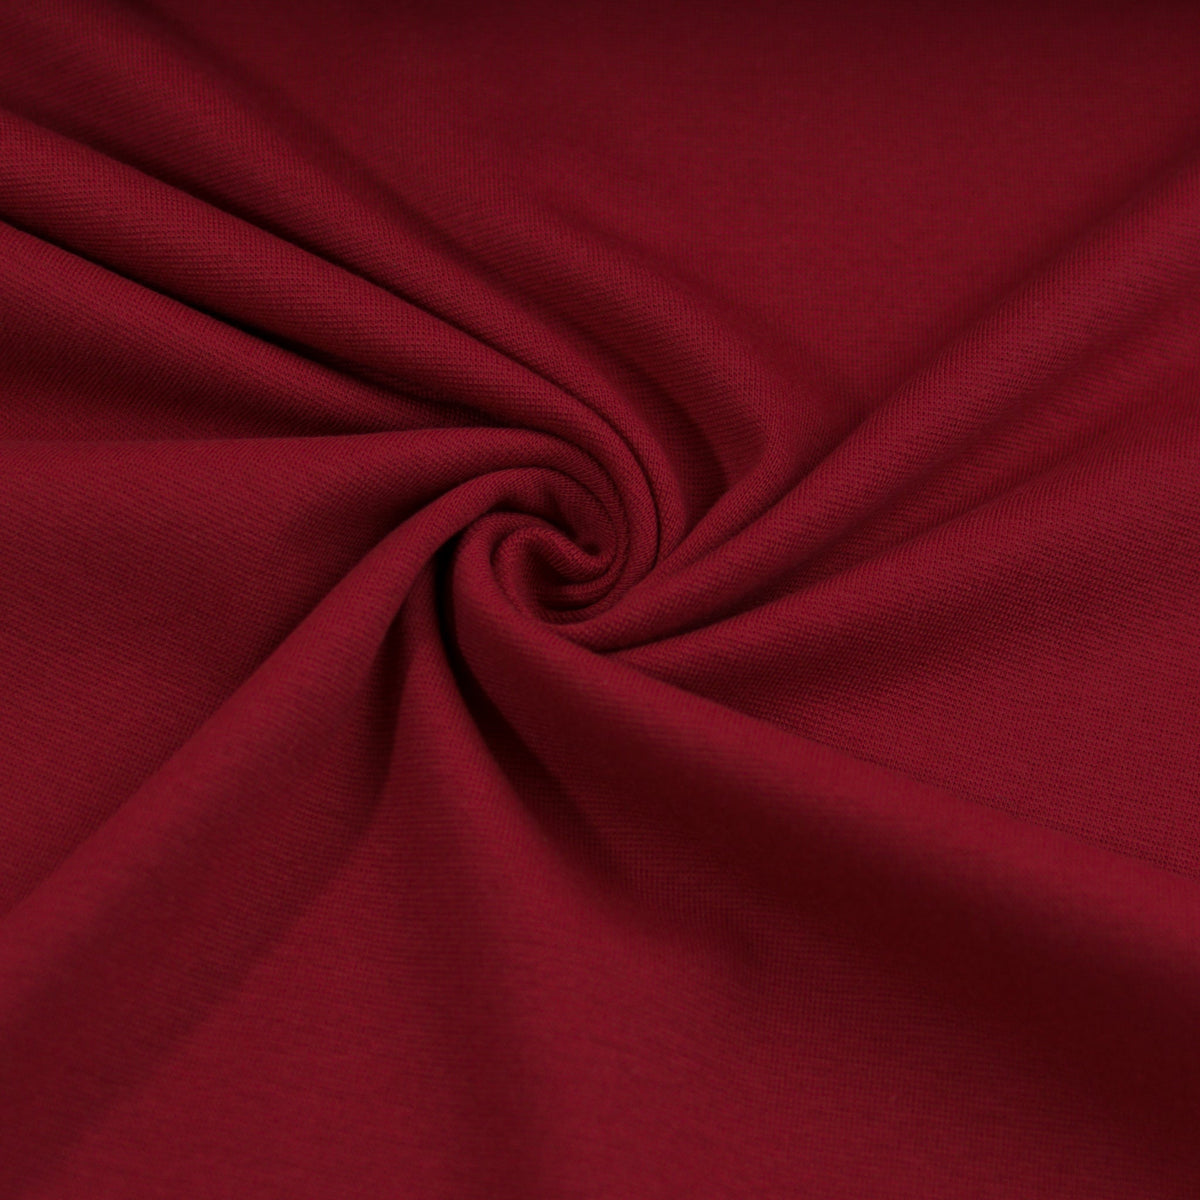 Bündchen - Bordeaux rot Fabric poshpinks